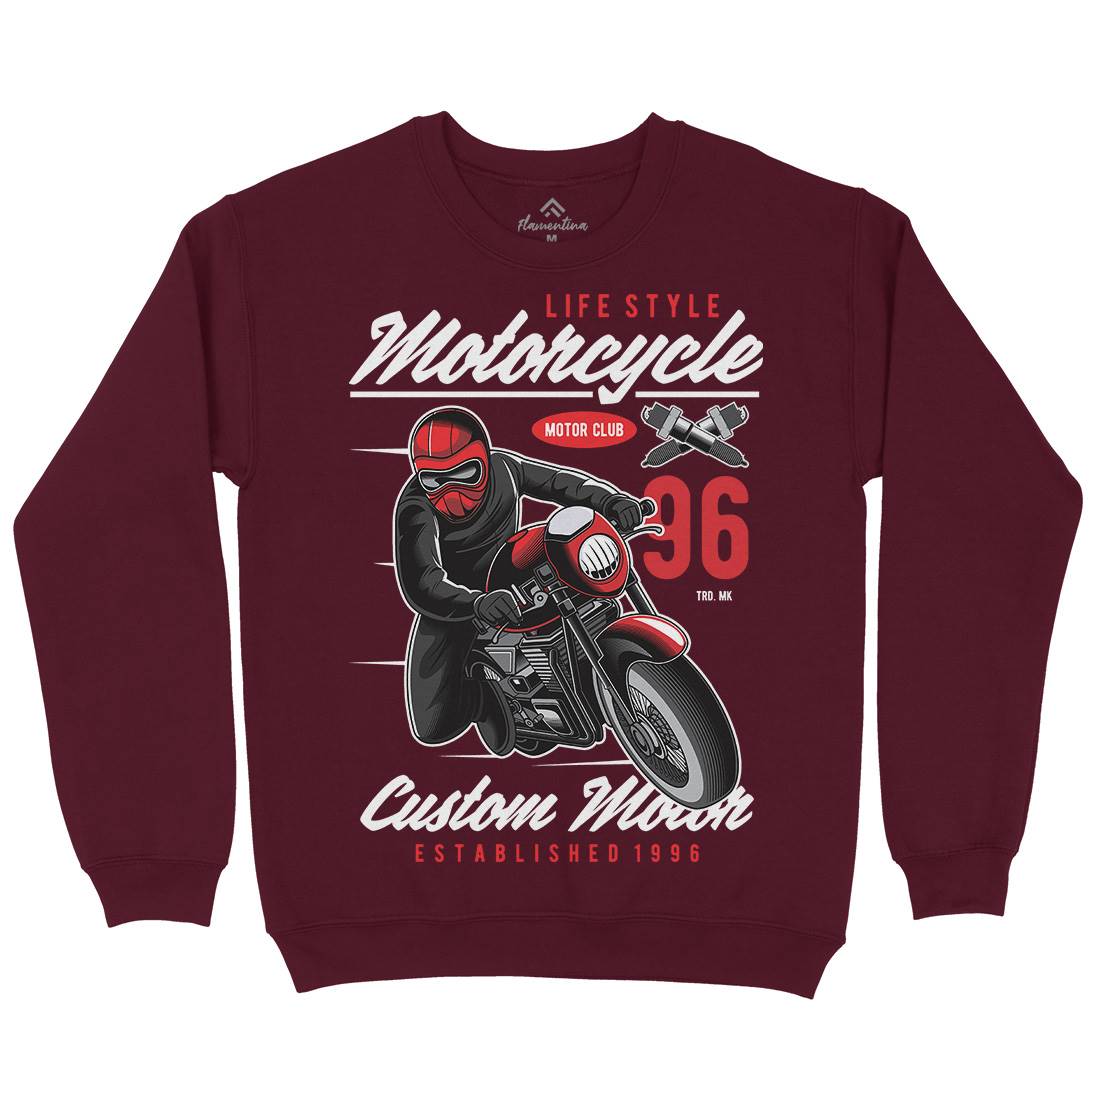 Lifestyle Kids Crew Neck Sweatshirt Motorcycles C399